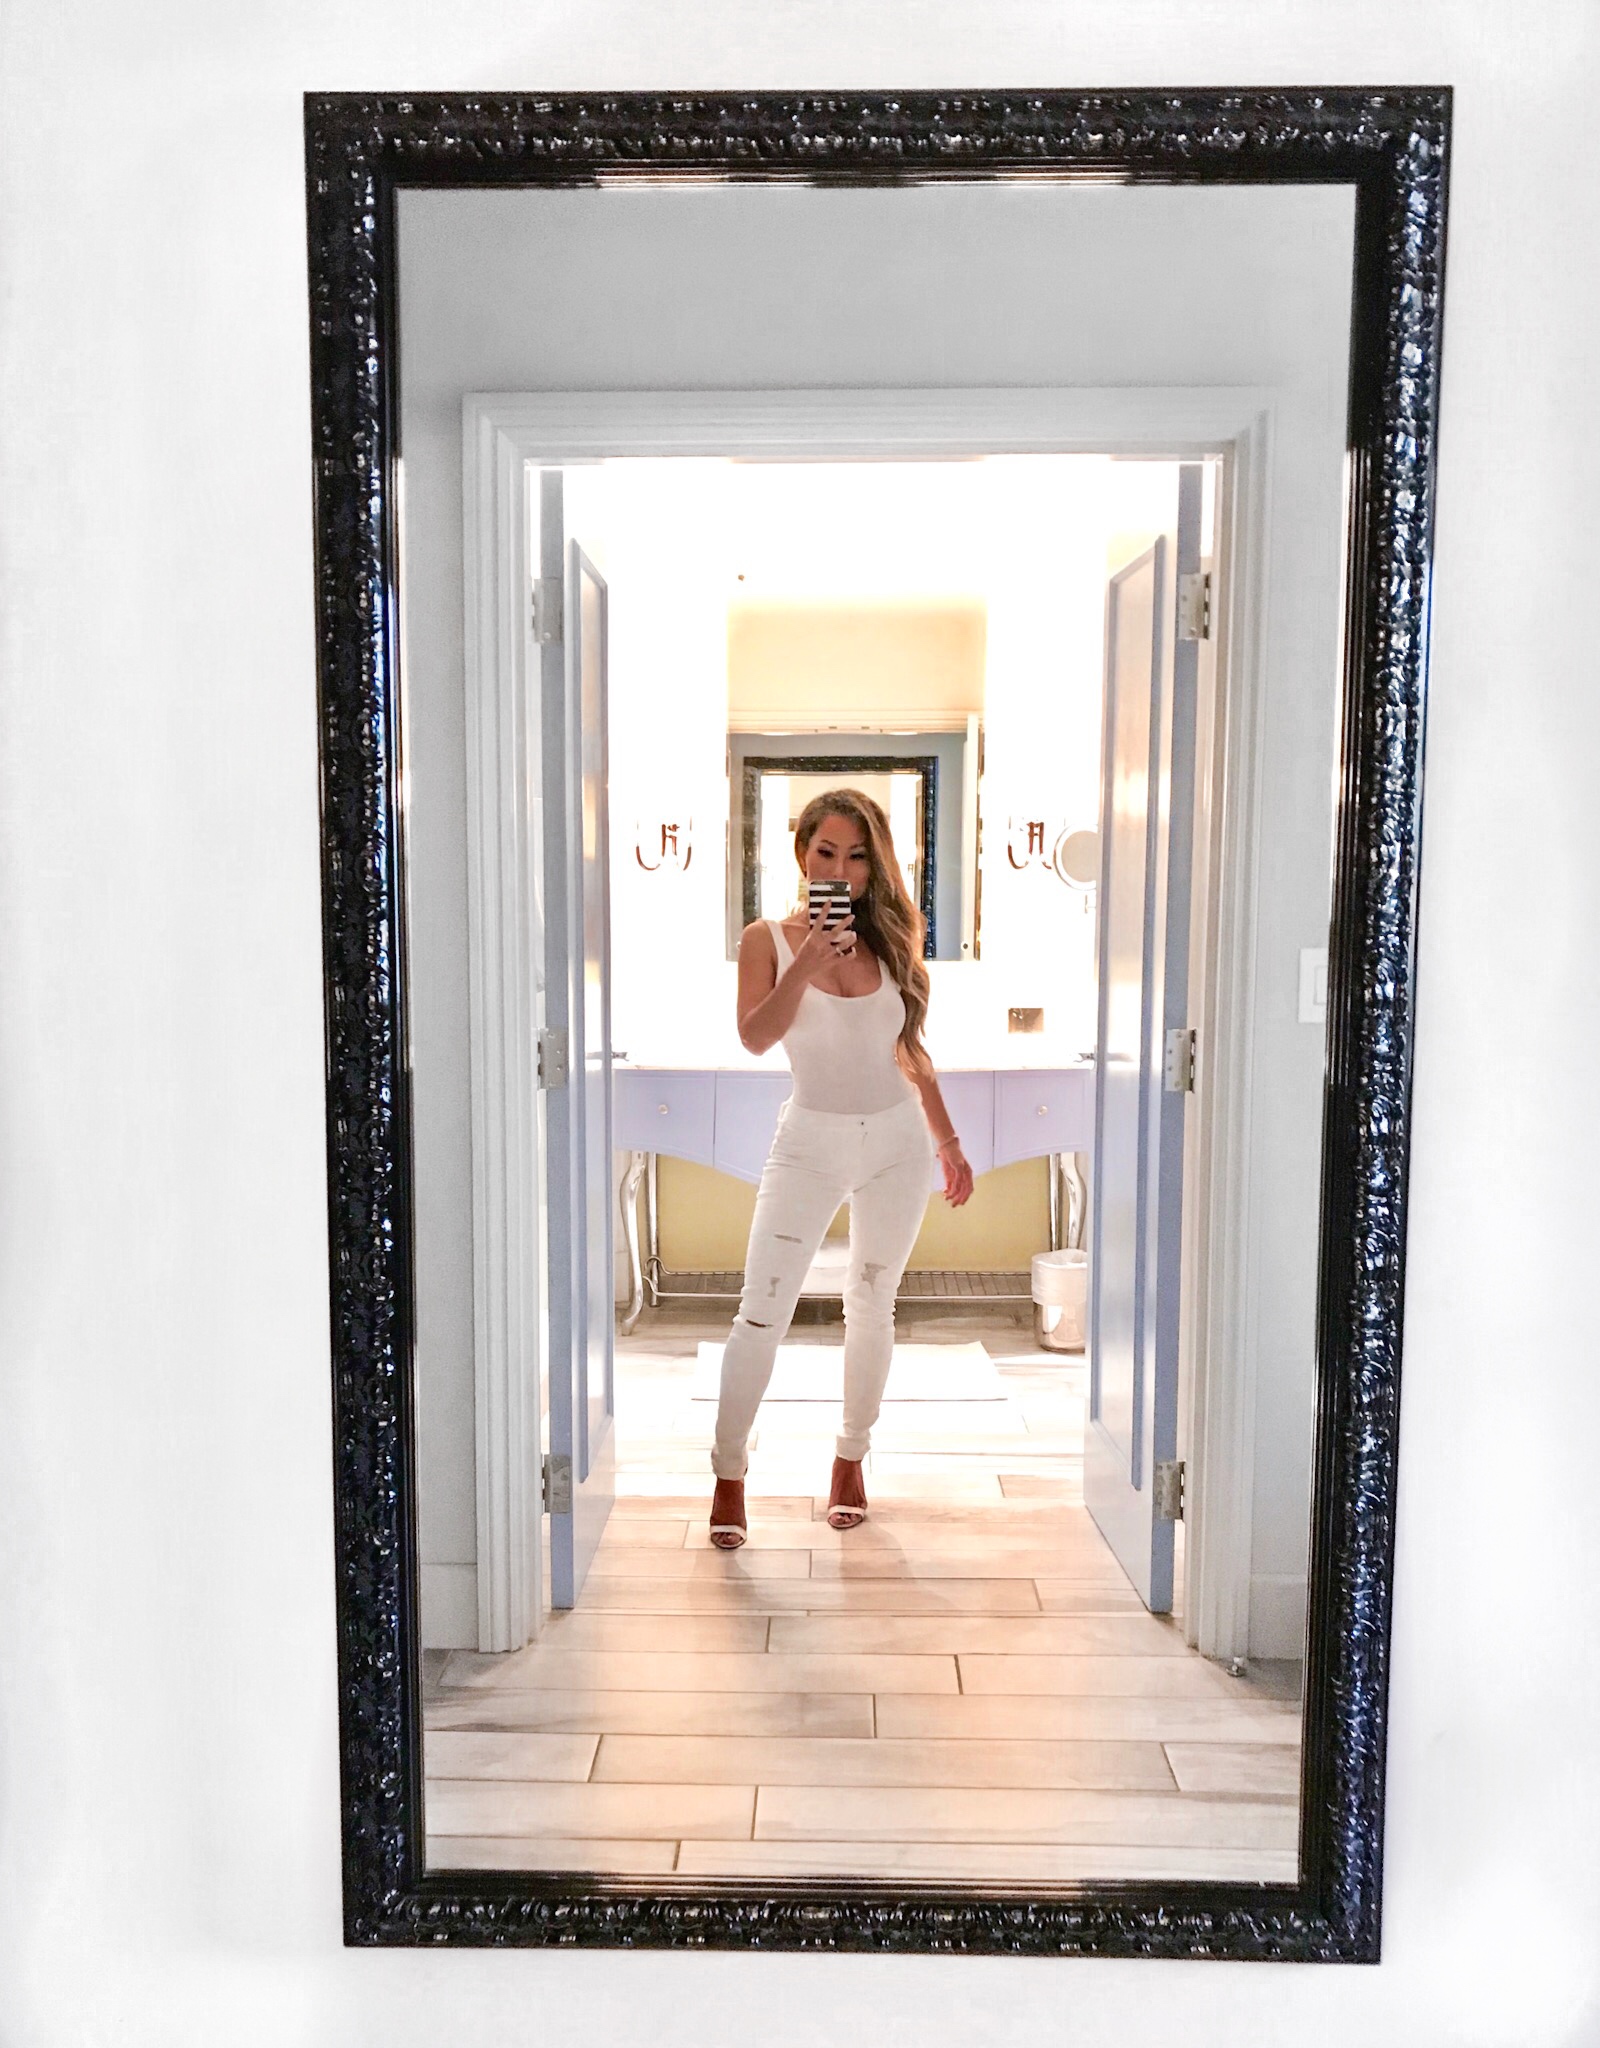 Grand bohemian Hotel Charleston, White jeans and a white bodysuit at Grand Bohemian Hotel